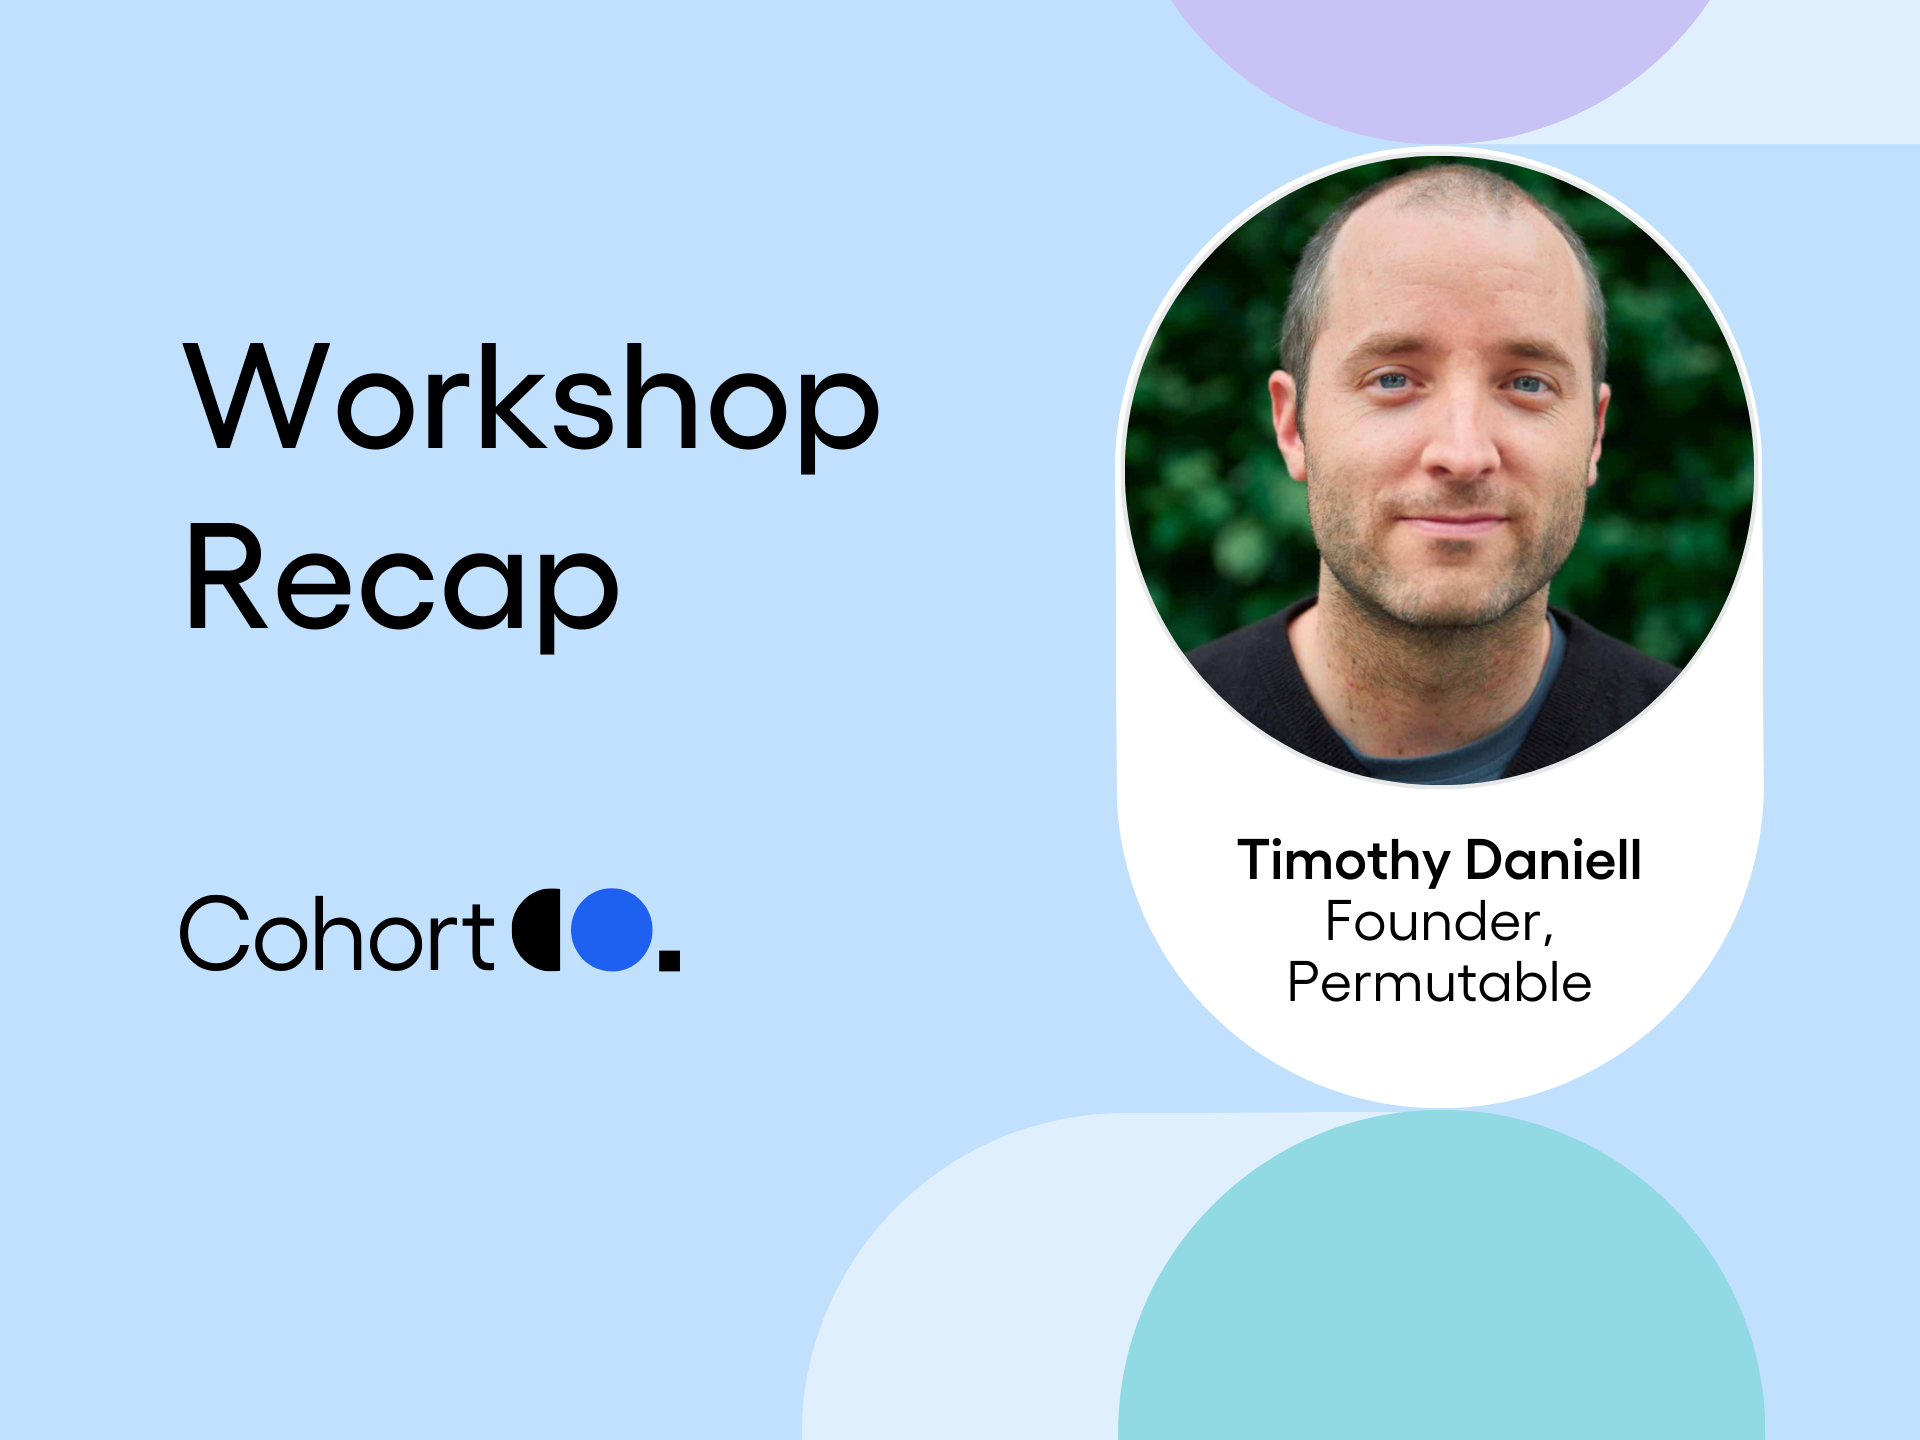 Retention workshop recap led by Timothy Daniell